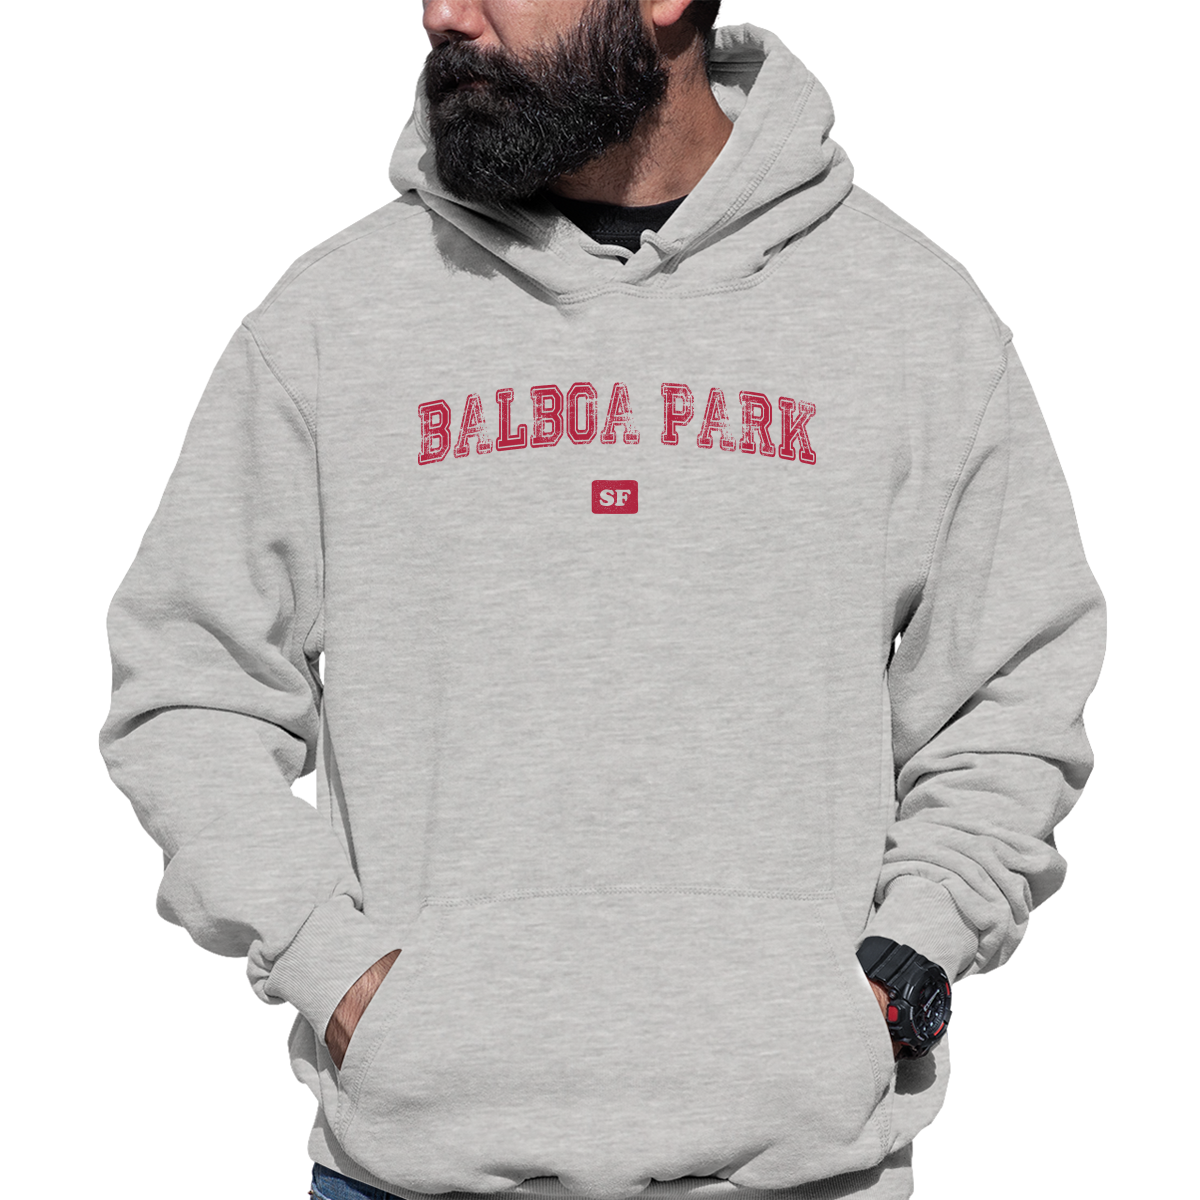 Balboa Park Sf Represent Unisex Hoodie | Gray